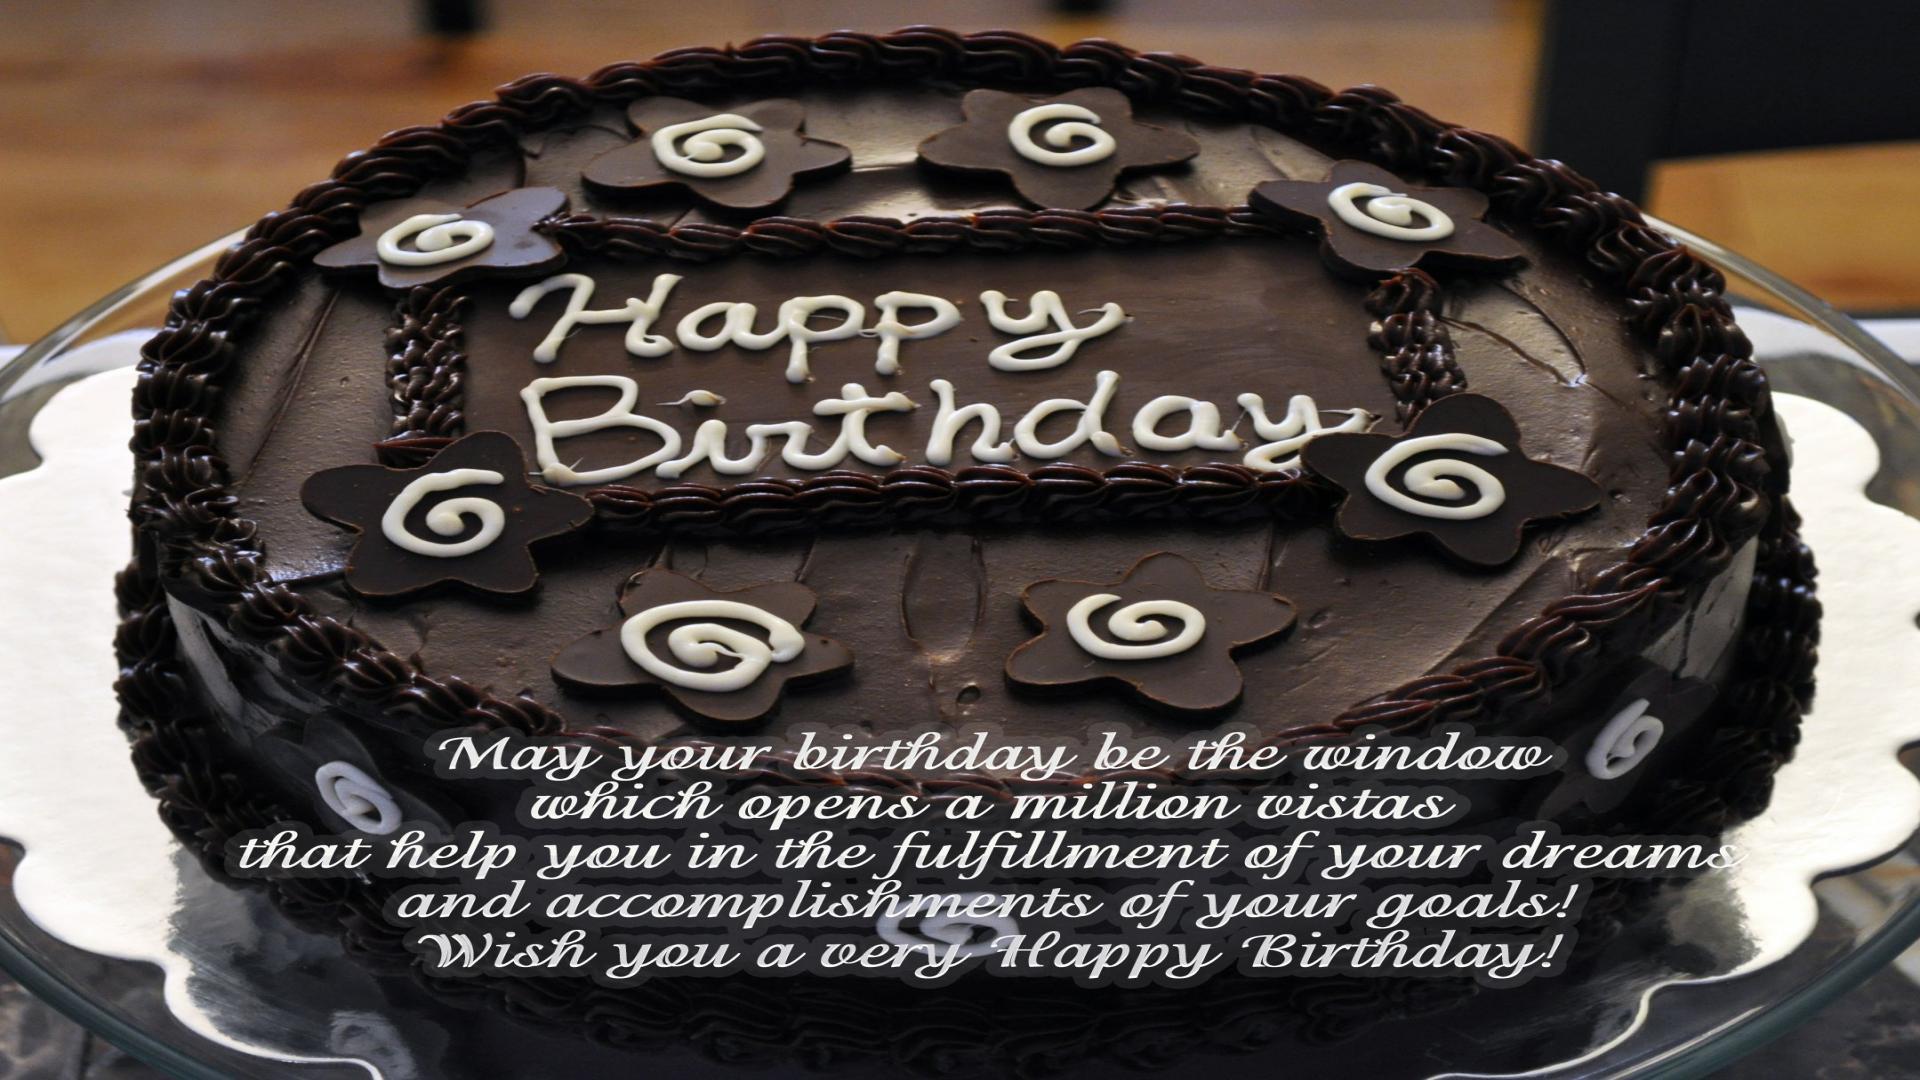 Holidays Birthday Black chocolate cake for the birthday 050816 Delicious birthday chocolate cake